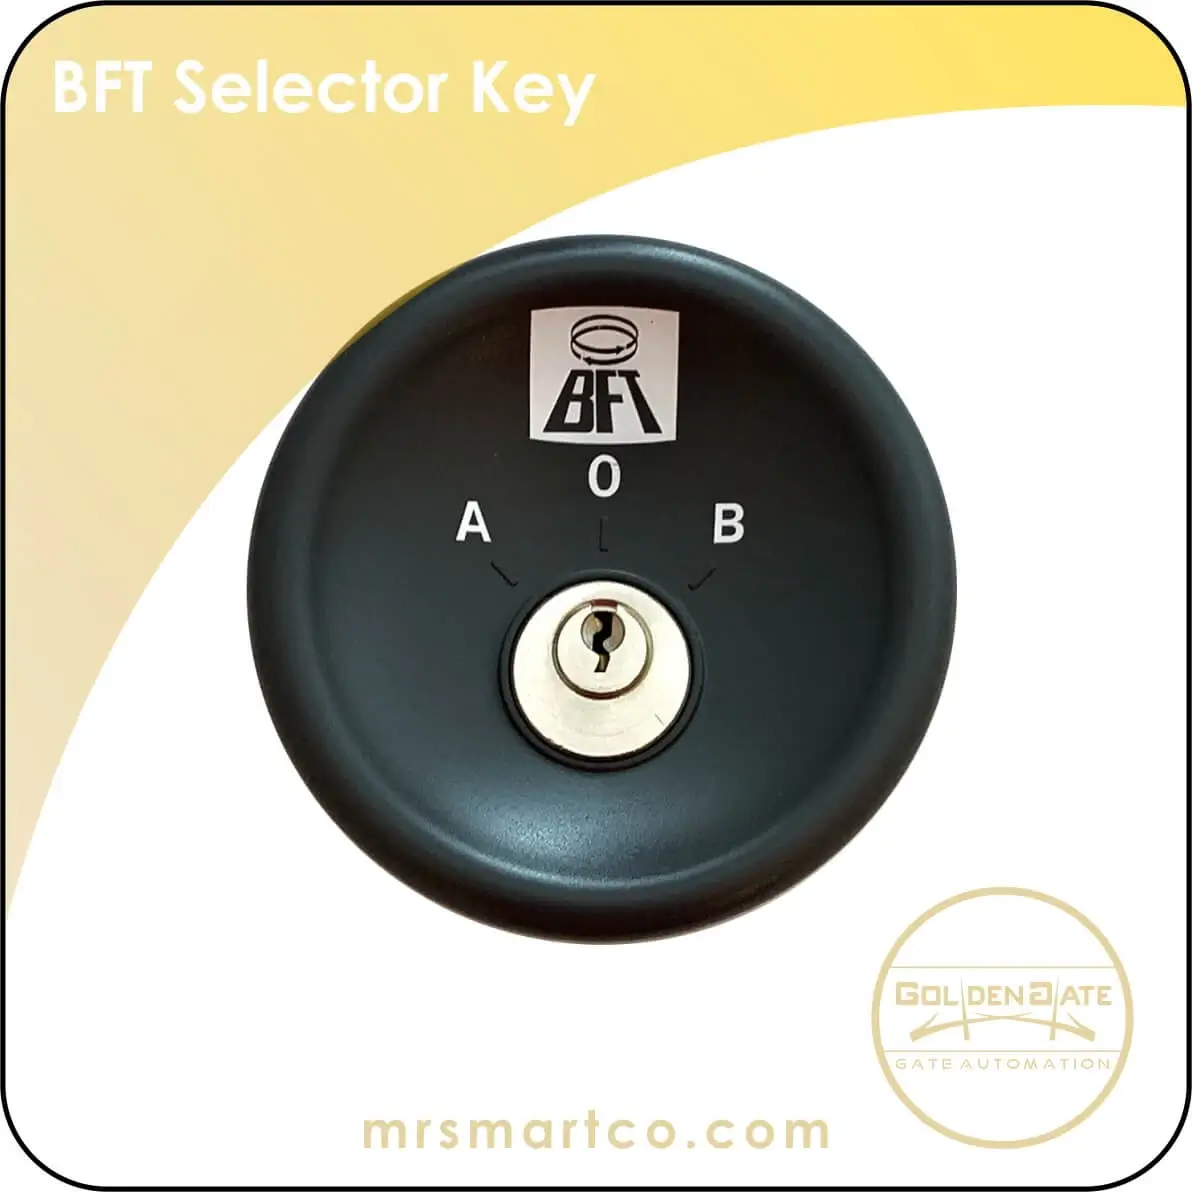 BFT selector key